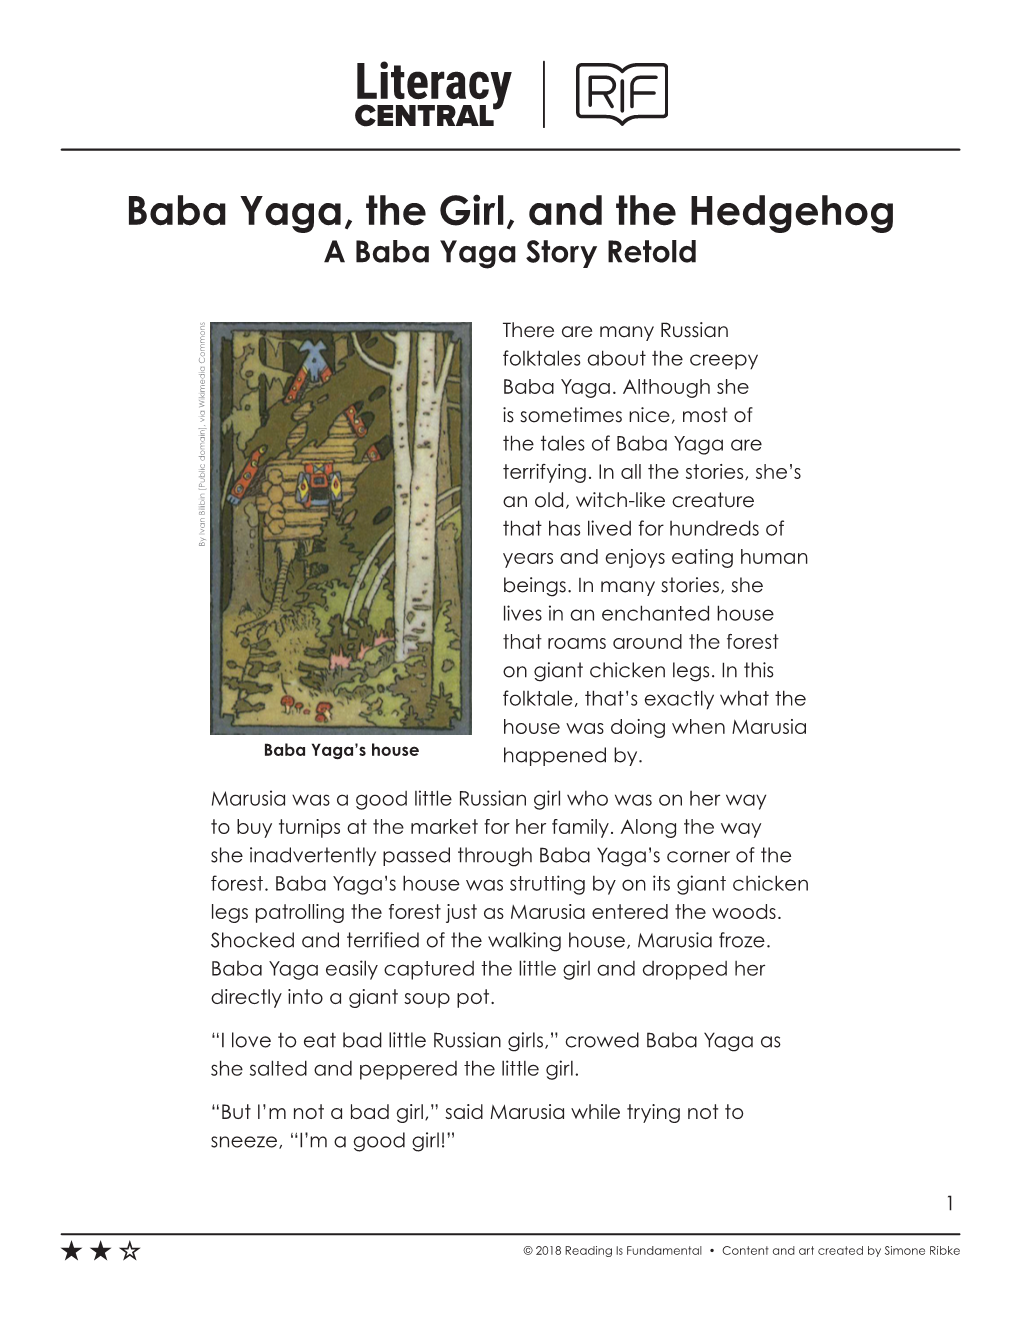 Baba Yaga, the Girl, and the Hedgehog a Baba Yaga Story Retold